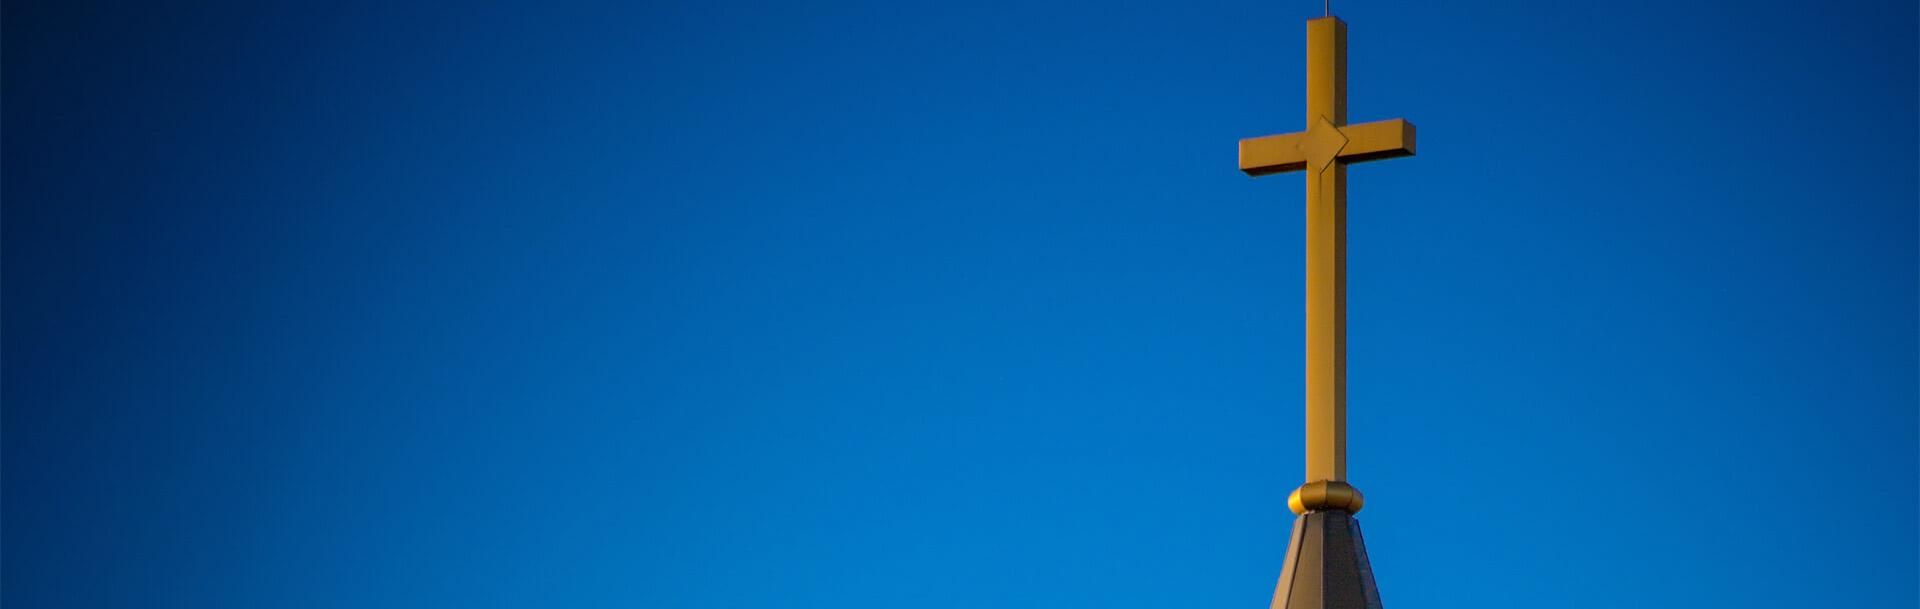 Steeple of St. John's Church against a bright blue sky